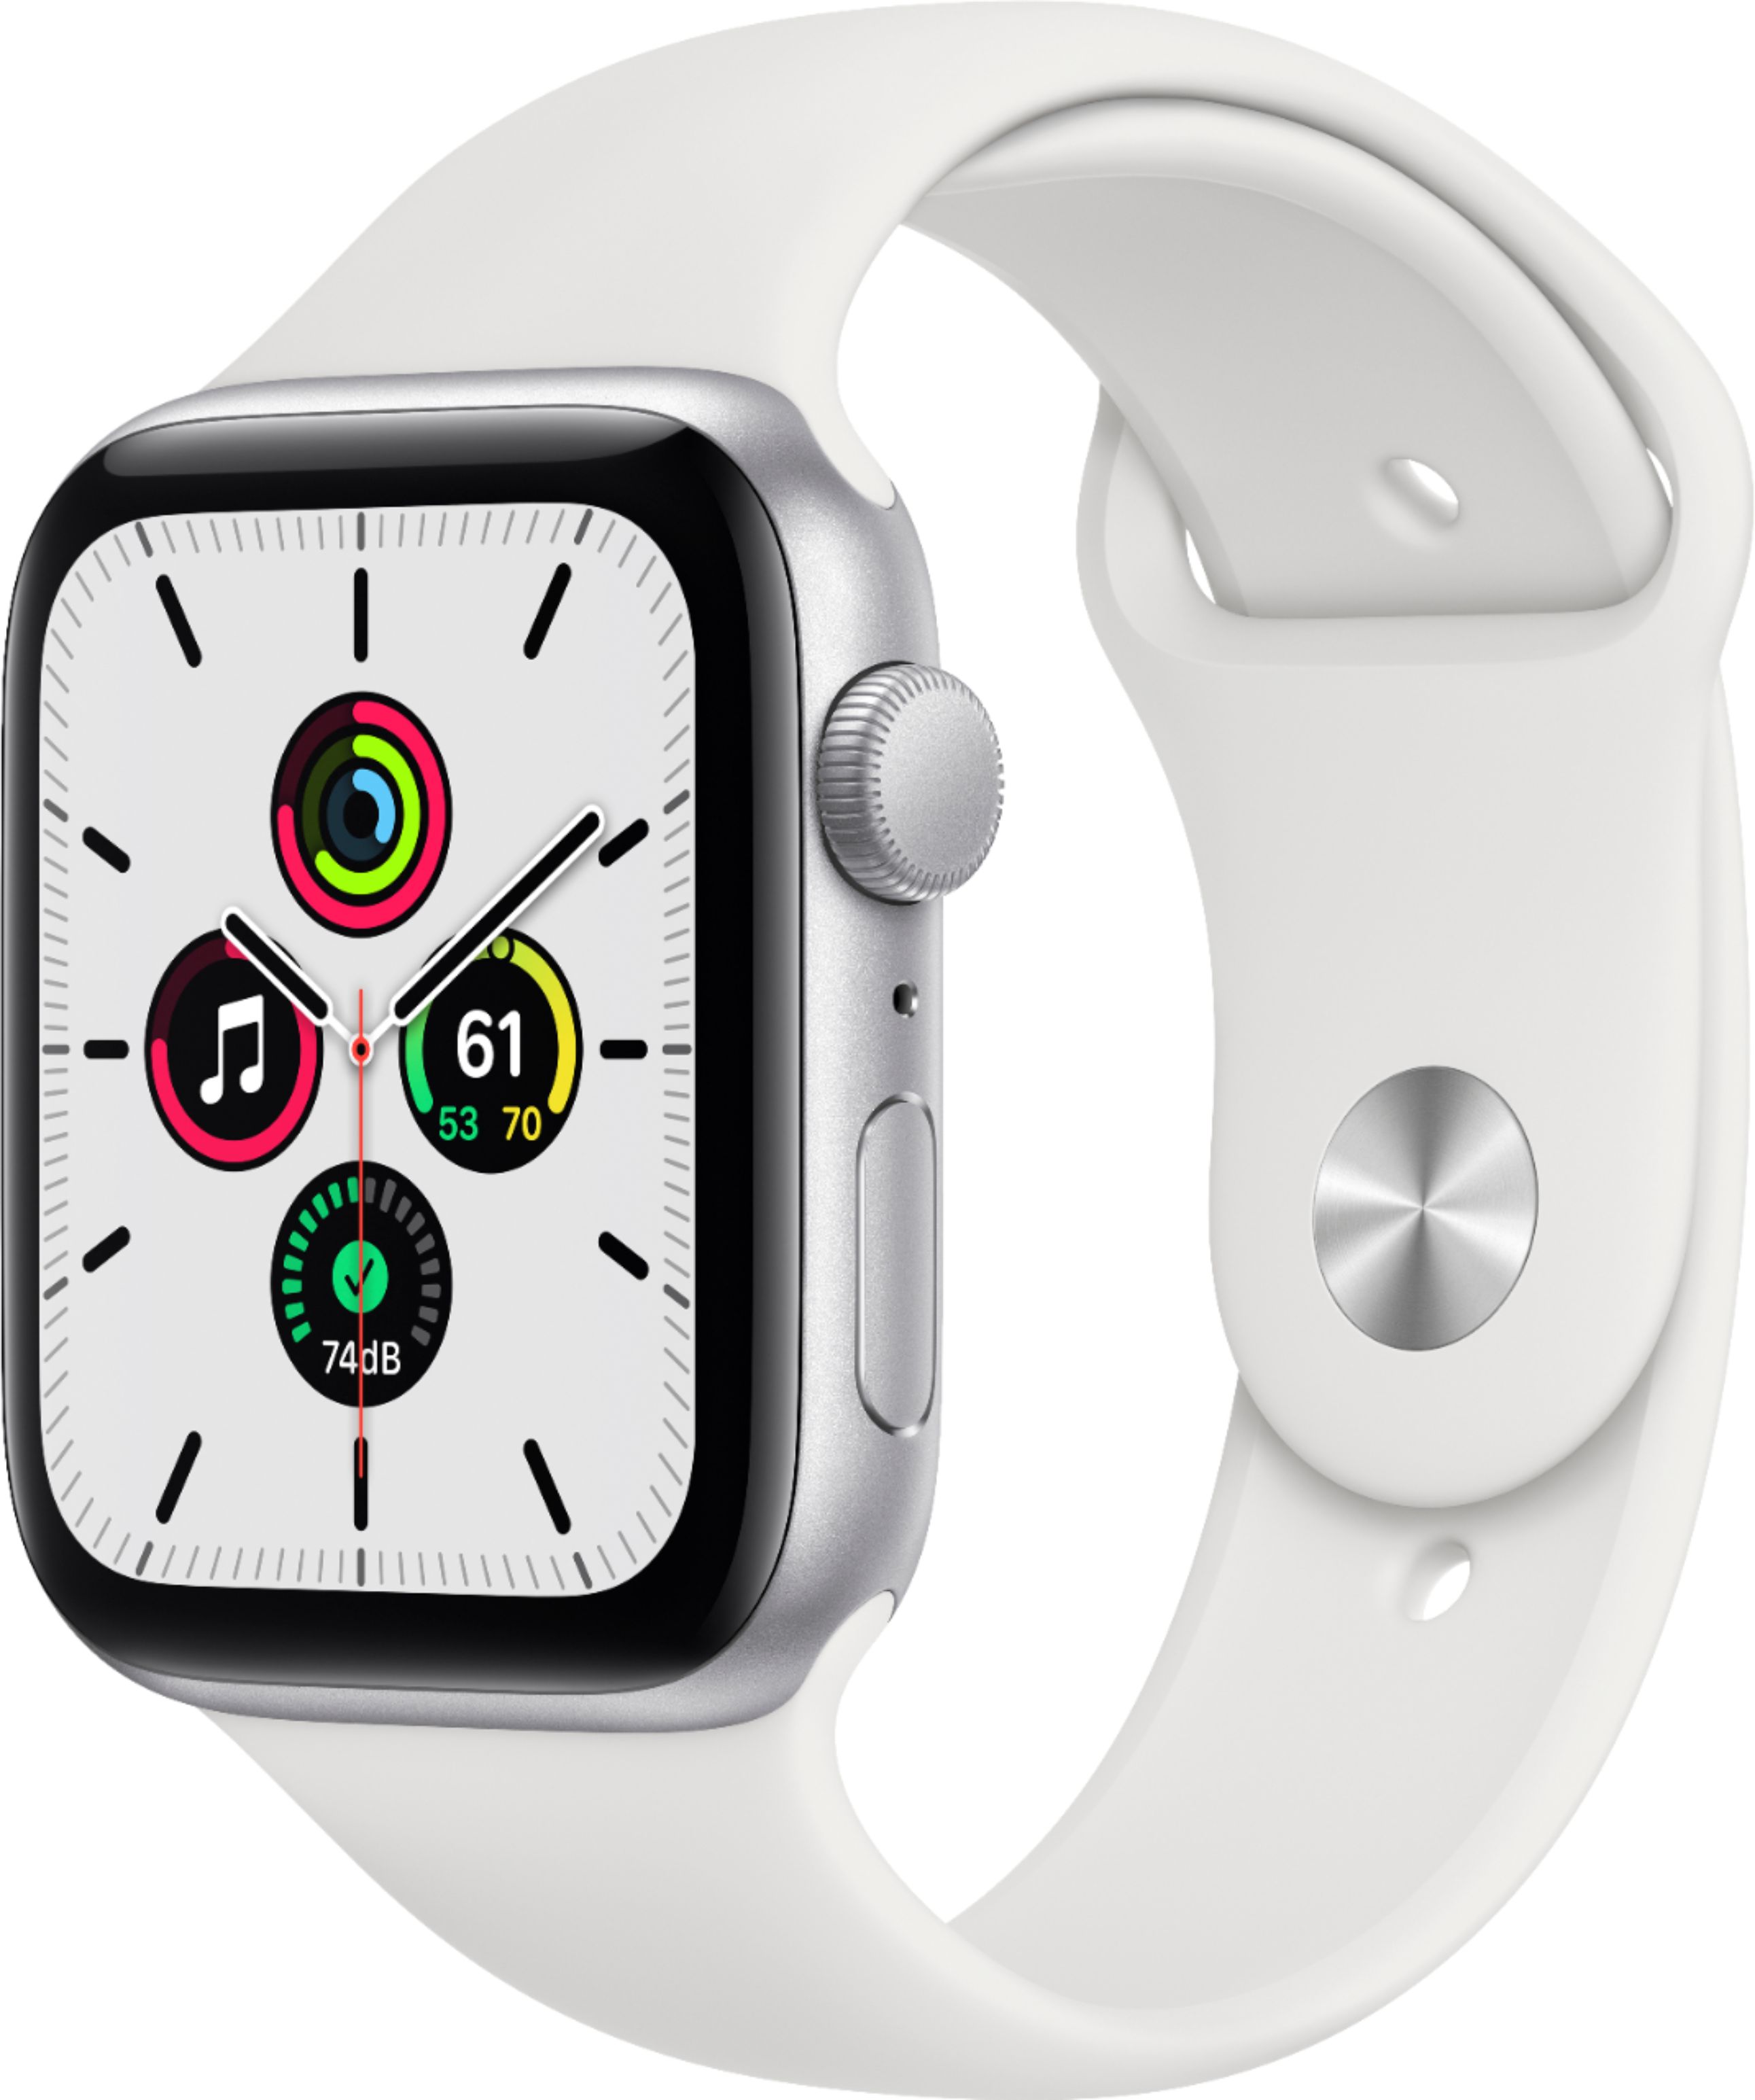 new apple watch price